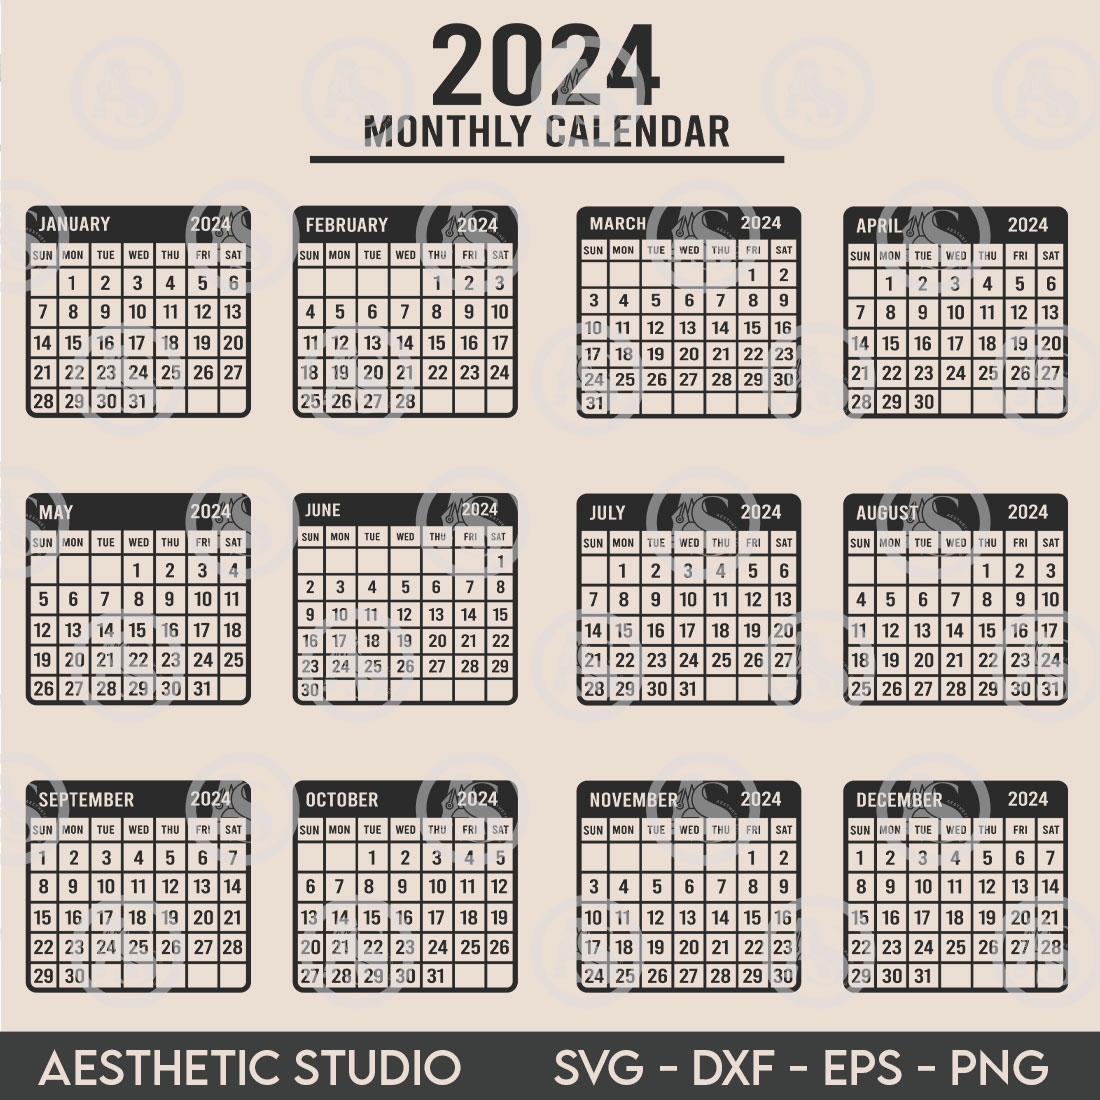 Bcs0072 2024 Calendar 571 